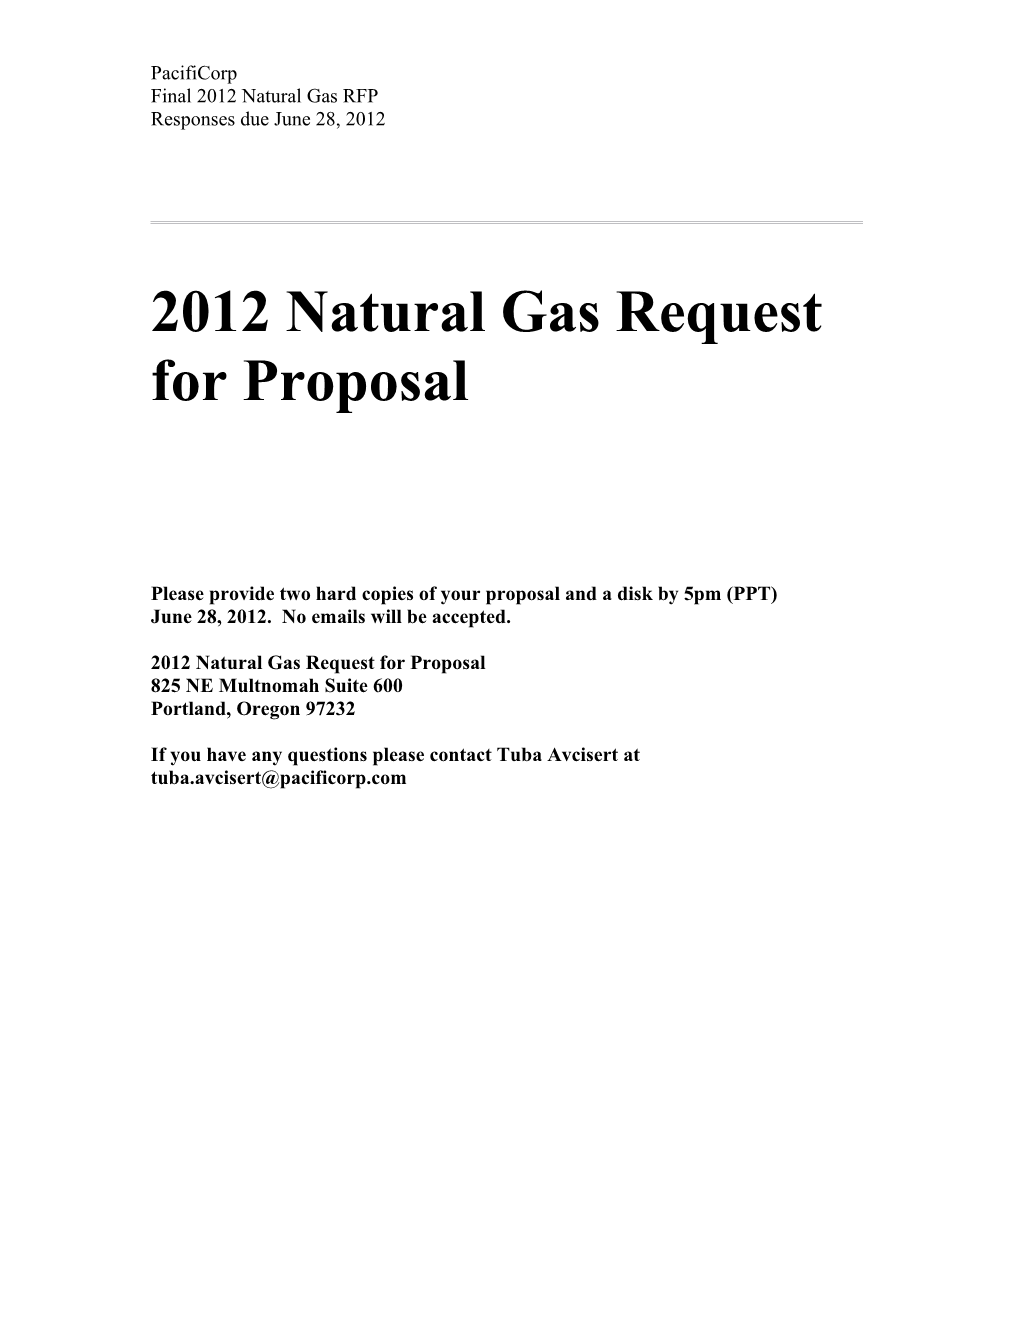 Final 2012 Natural Gas RFP